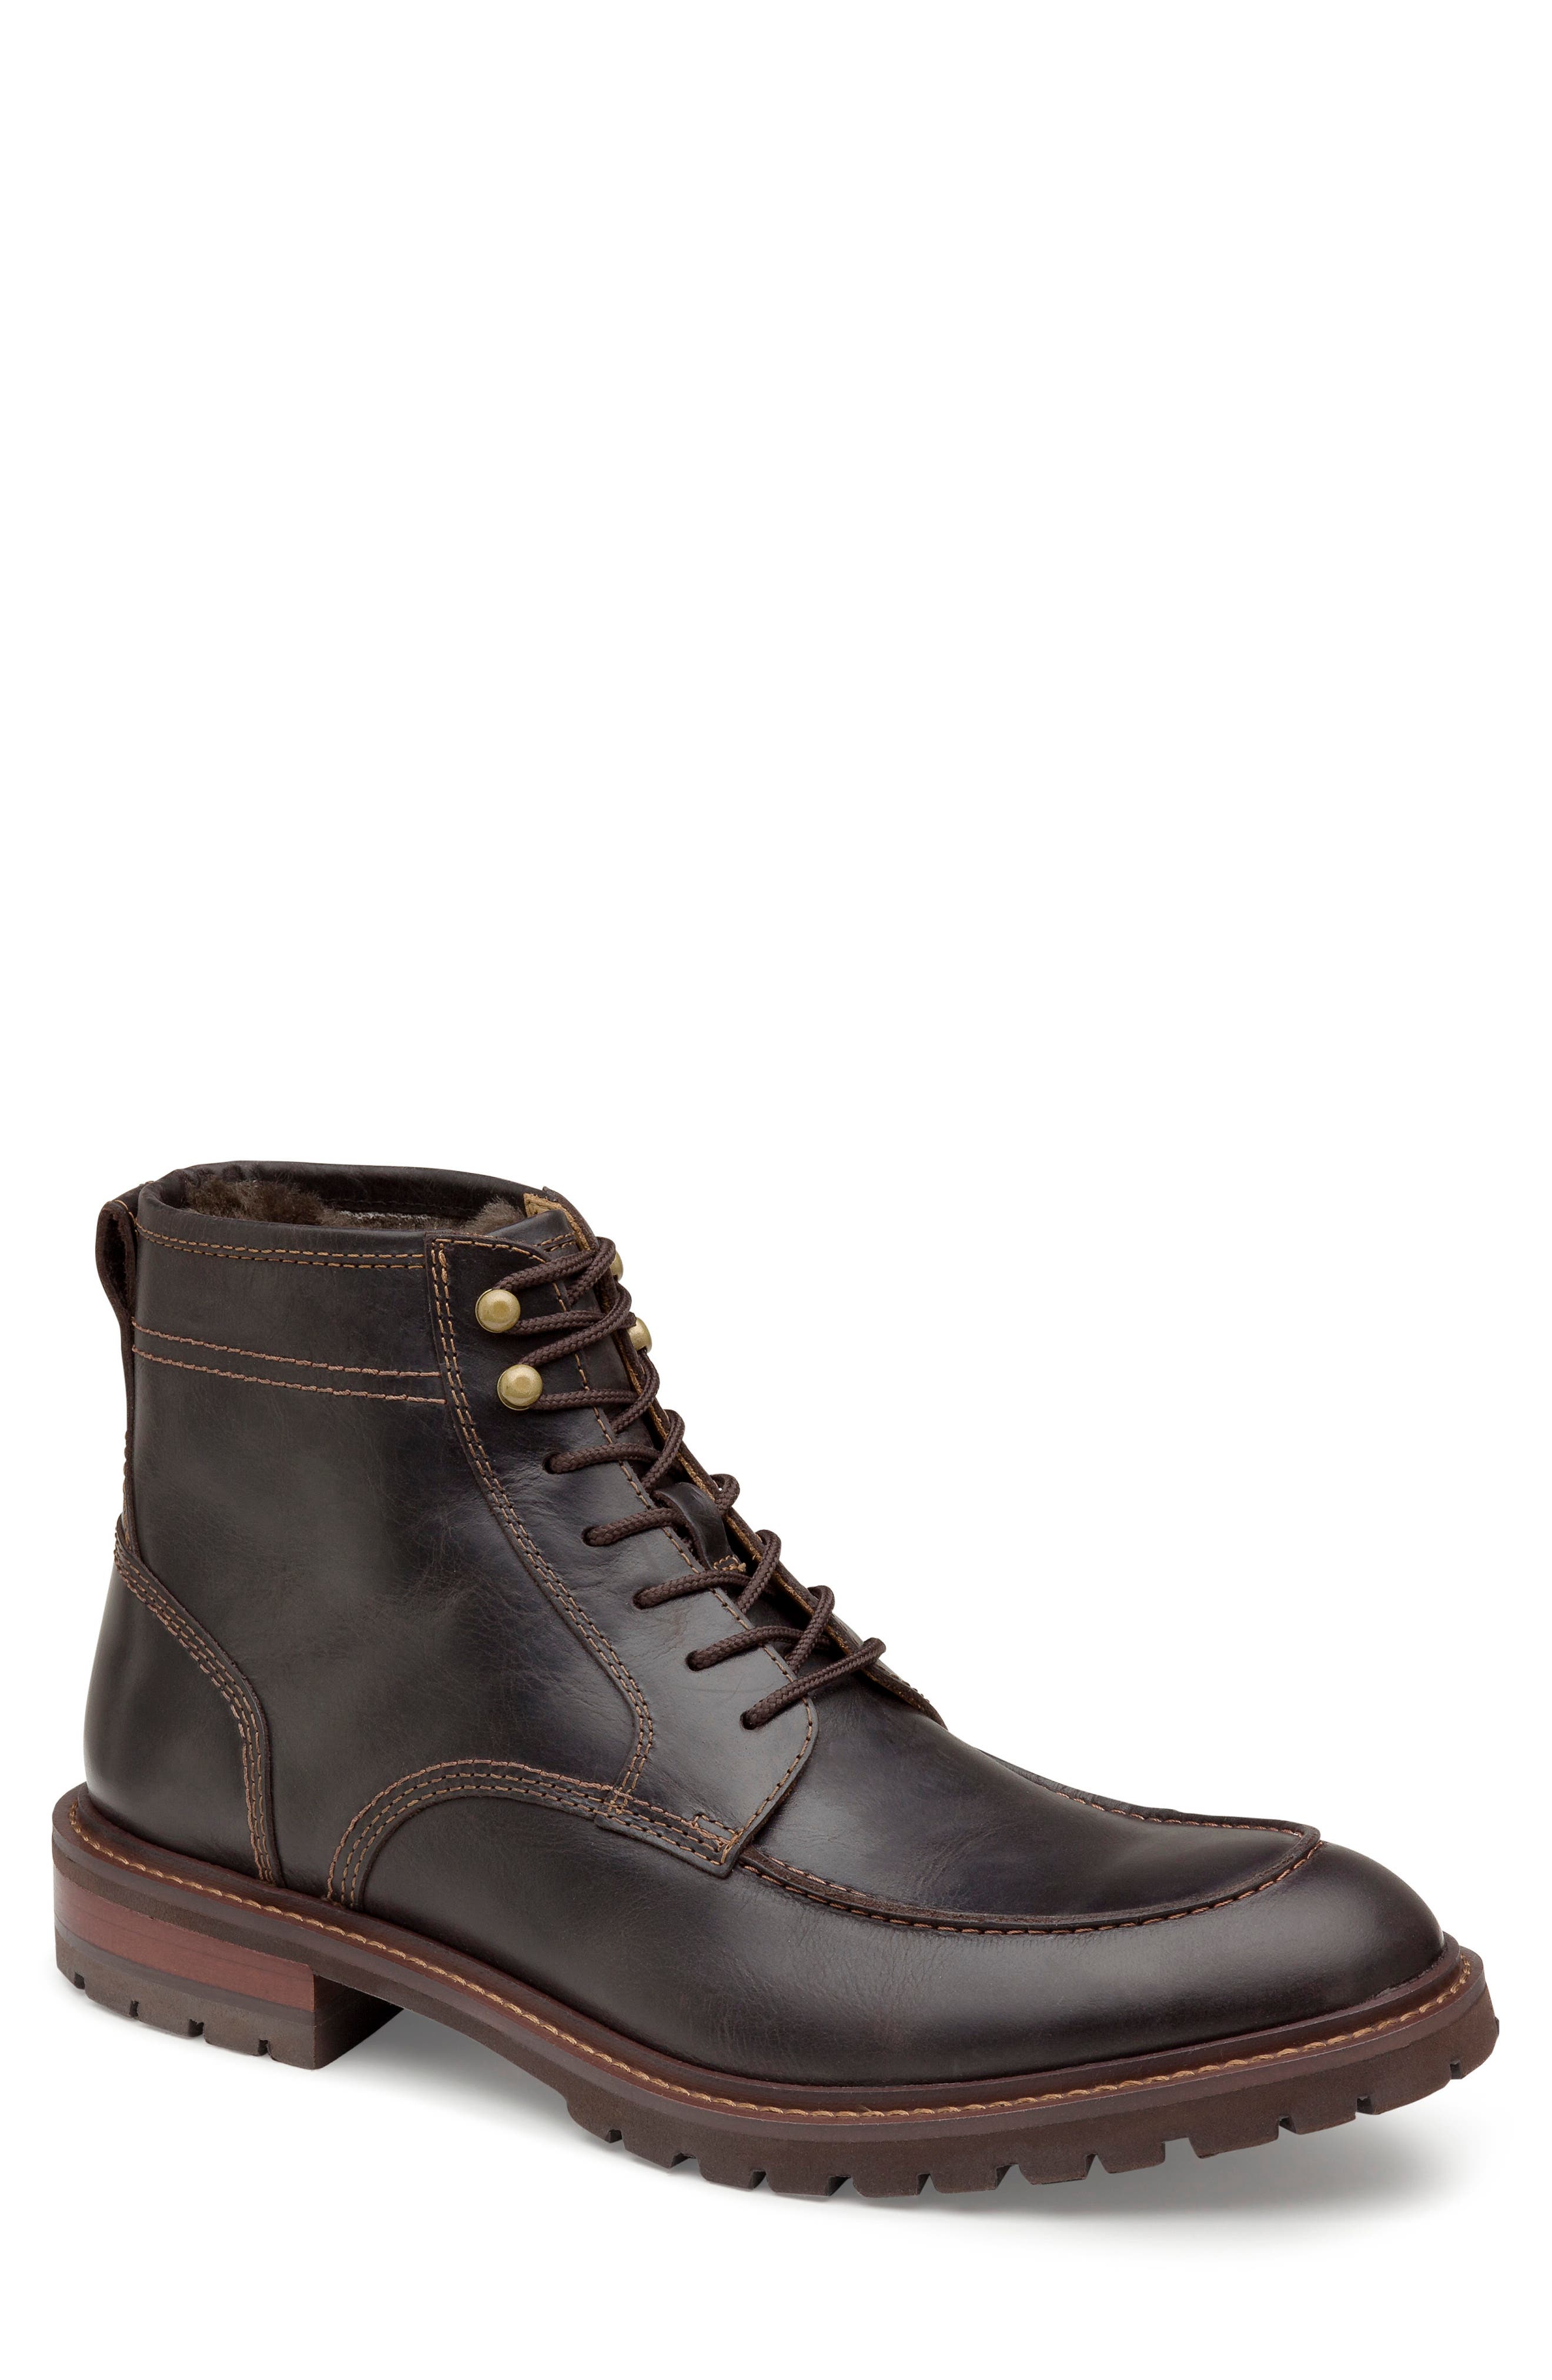 592581 MS50 Men's Shoes Size 12 M Black Leather Lace Up Johnston & Murphy